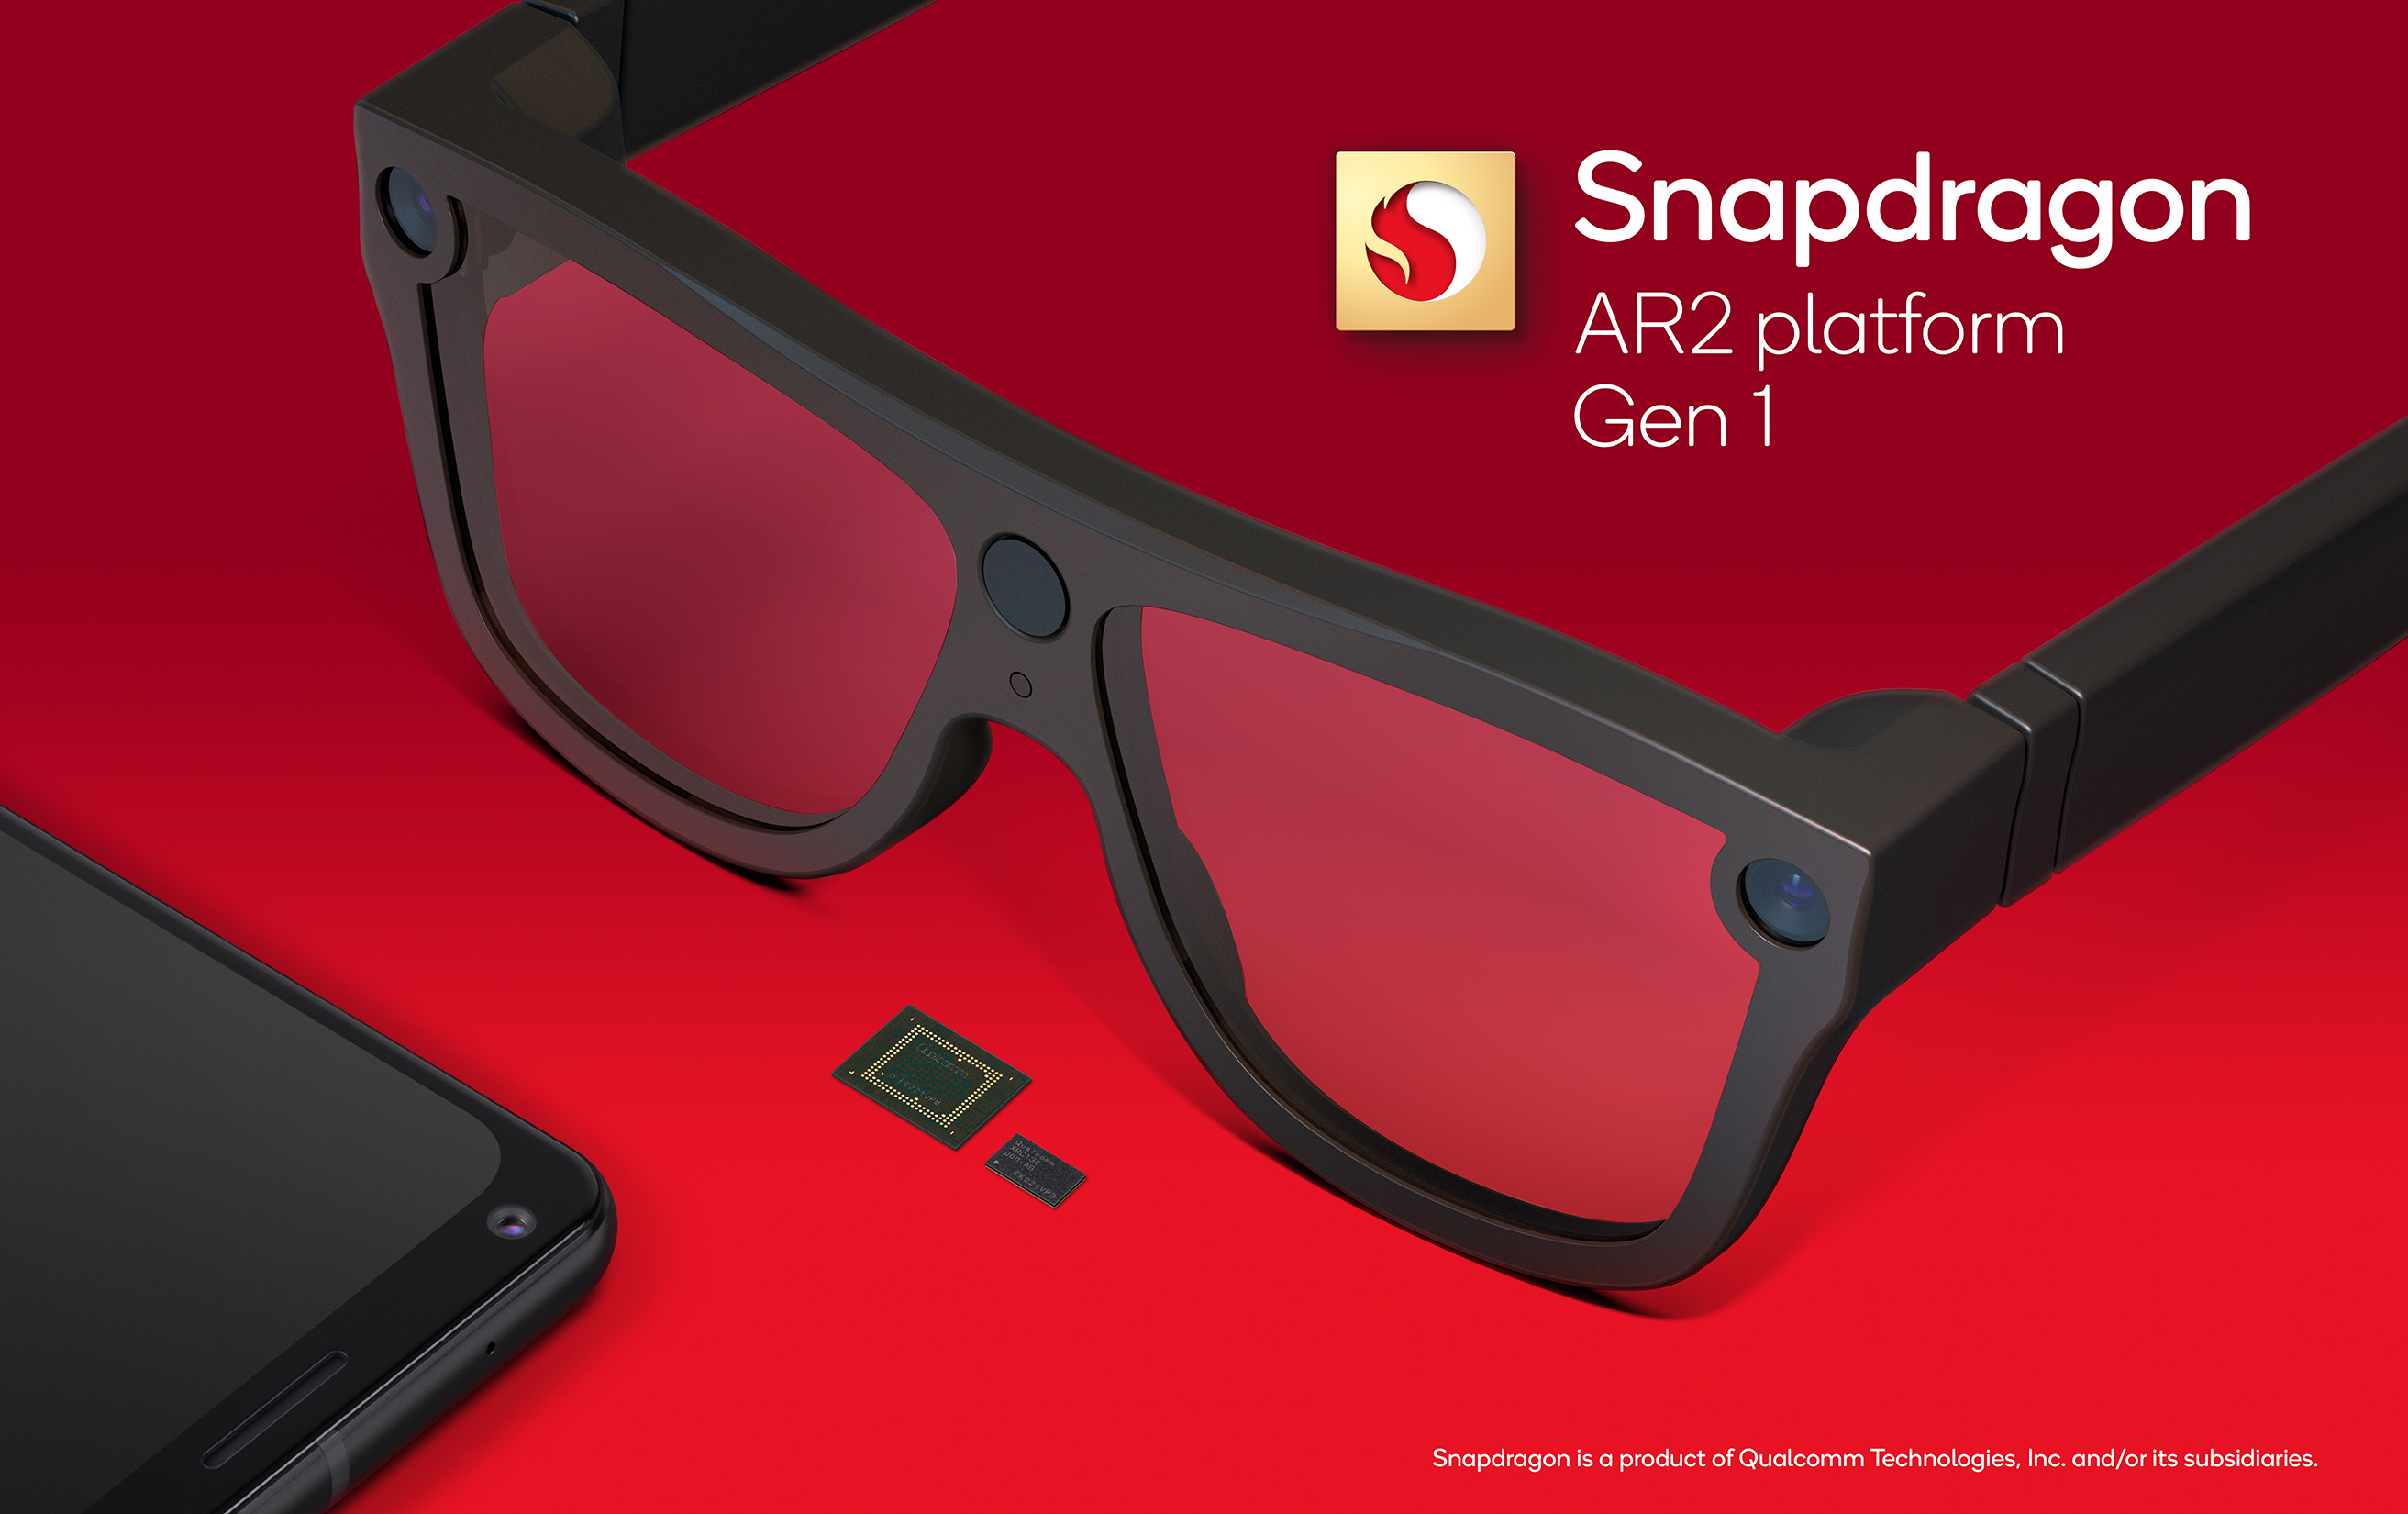 A herp press images of the Snapdragon AR2 Gen 1 platform and glasses